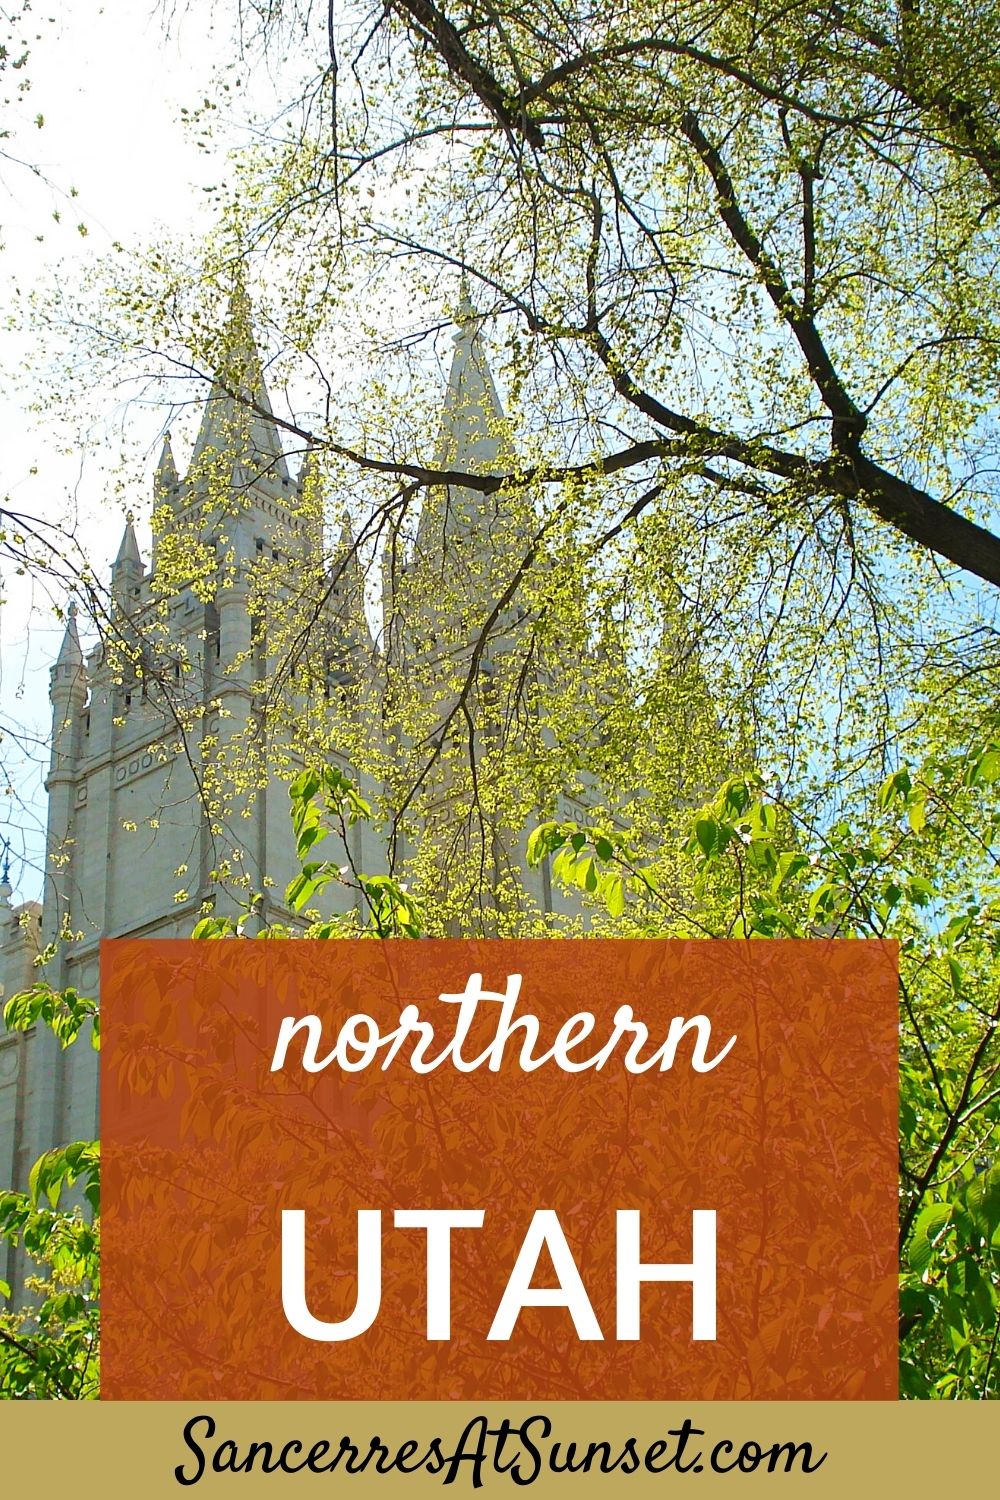 Northern Utah -- part 2 of the great American road trip